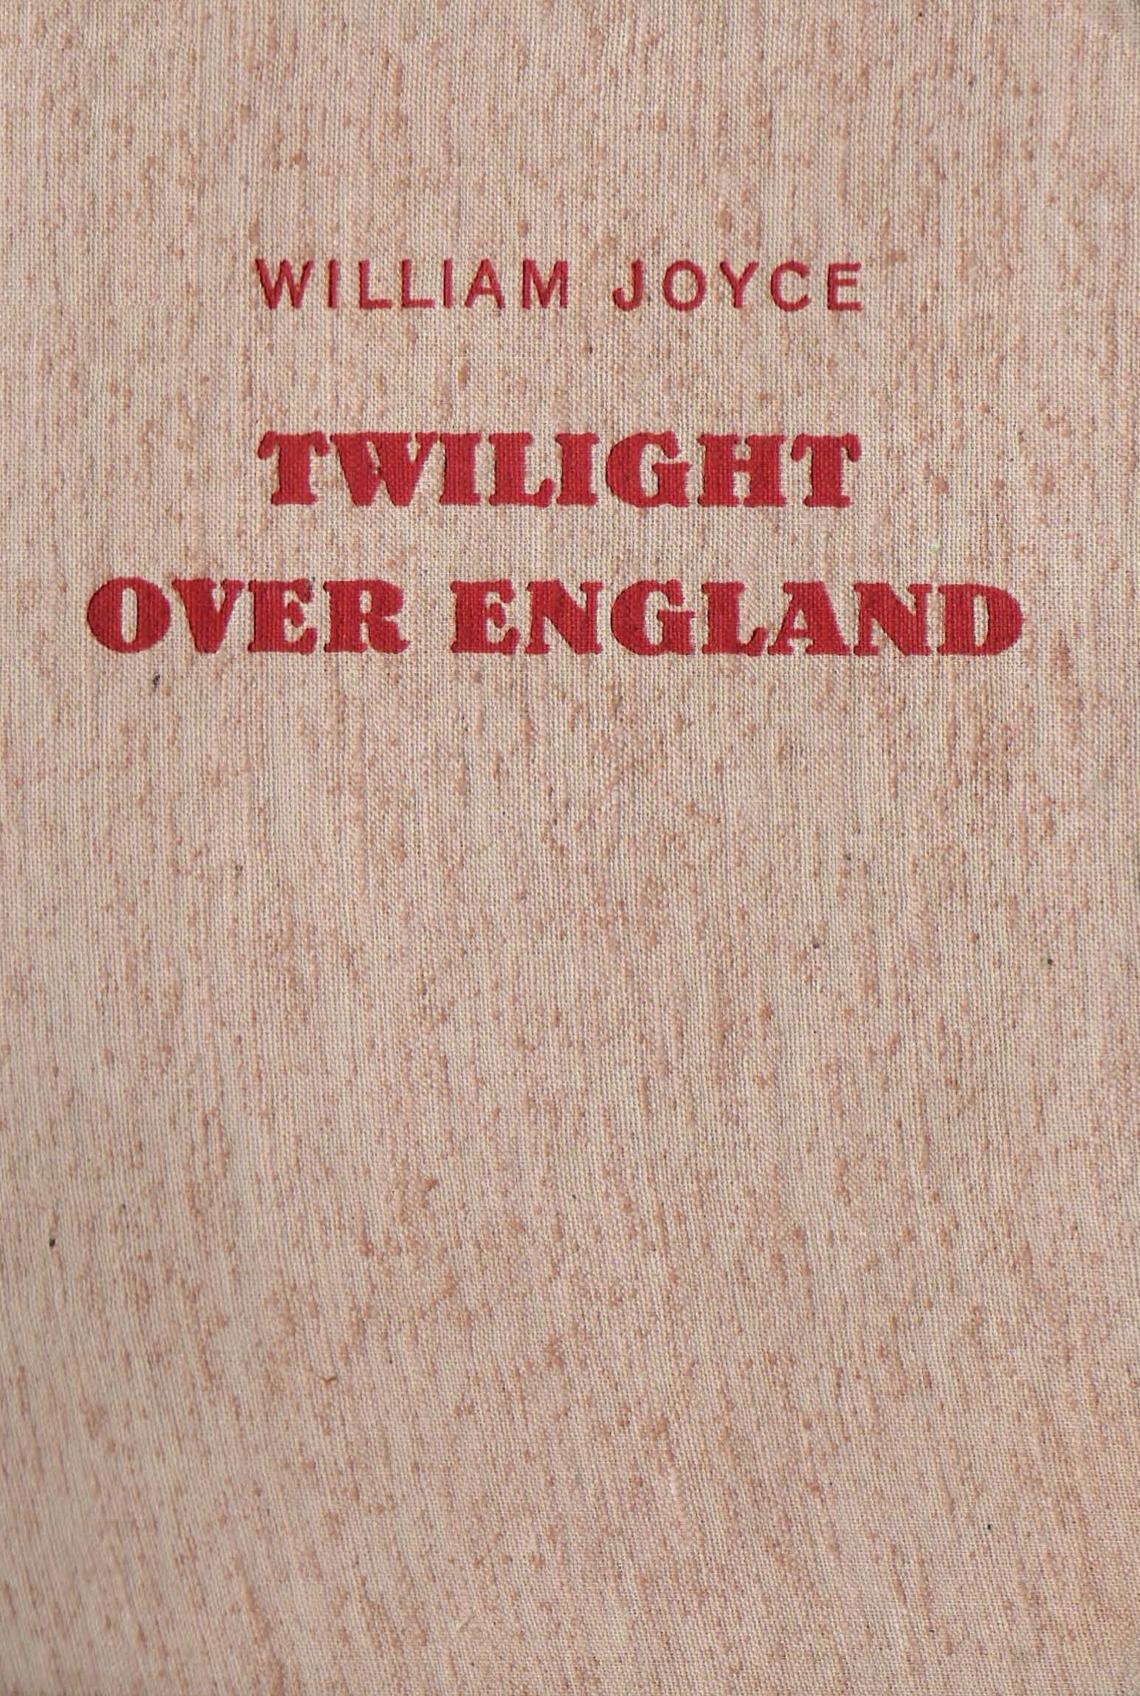 Twilight Over England (1940) by William Joyce